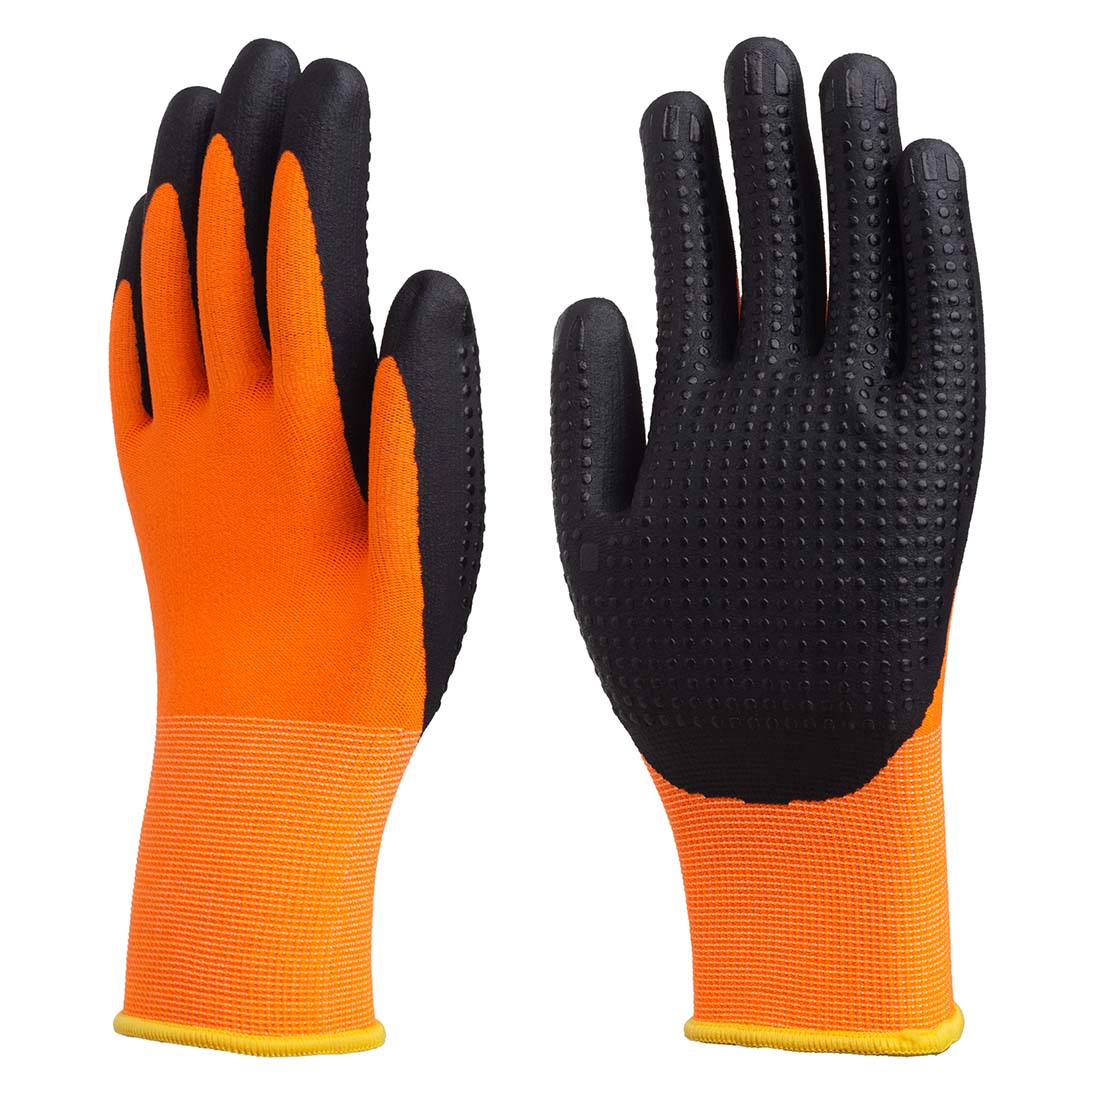 13G micro foam nitrile gloves | 13G palm coated gloves | 13G coated gloves